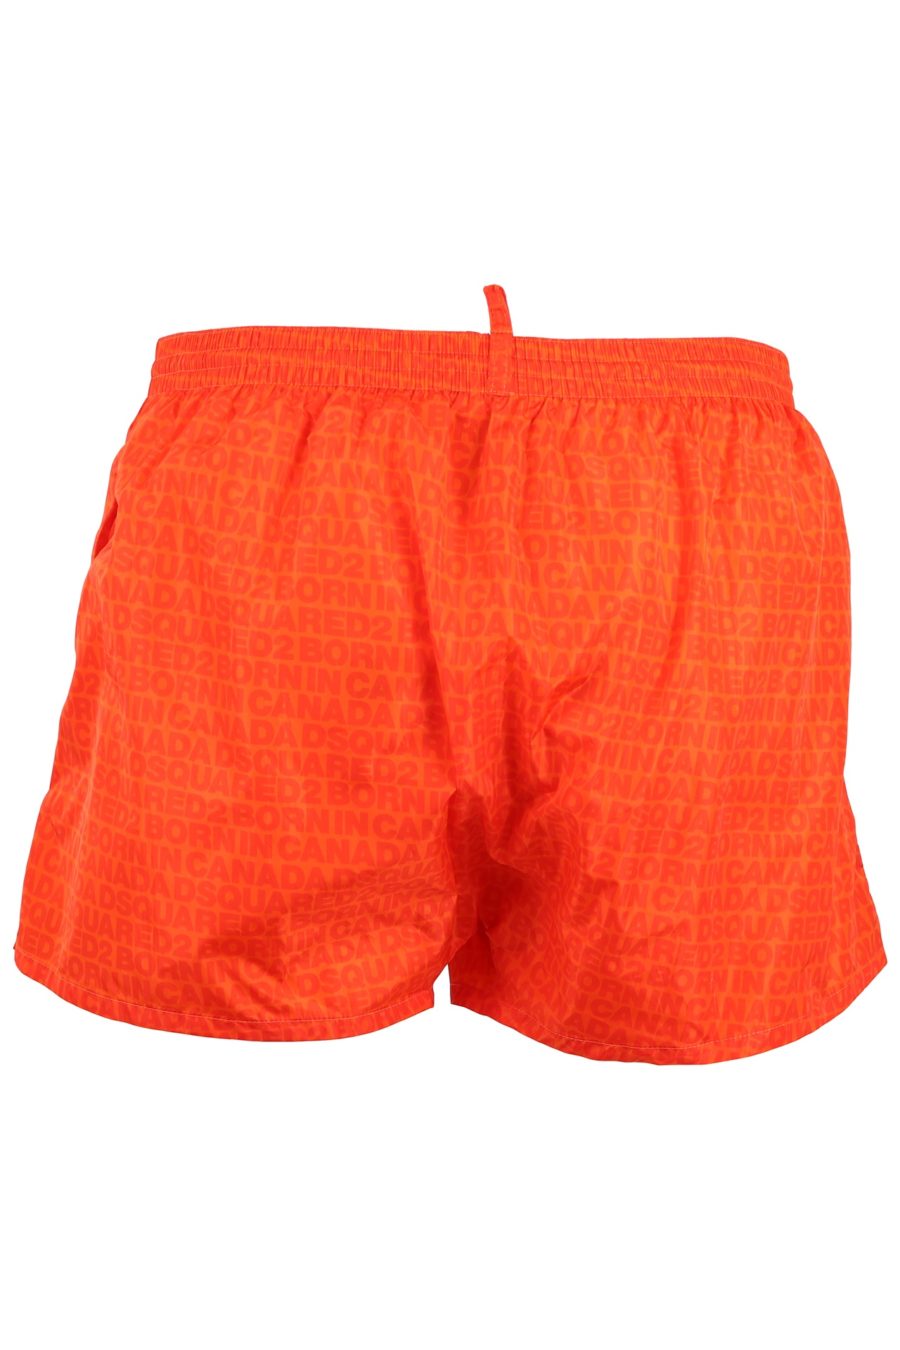 Swimming costume Dsquared2 orange logo - 0c6900140a6eaa0d69f0137a246390316ca57062